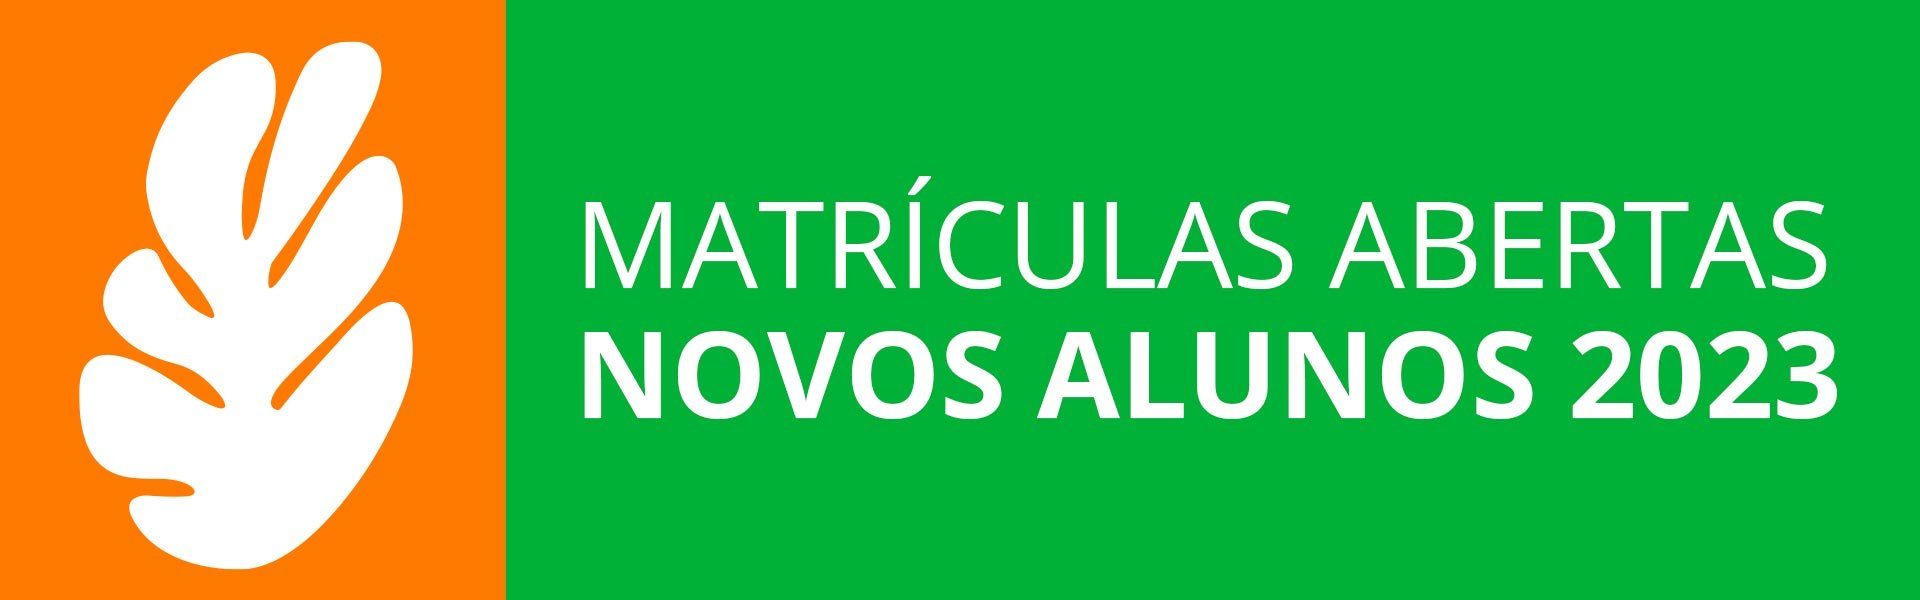 banner_matricula_viva